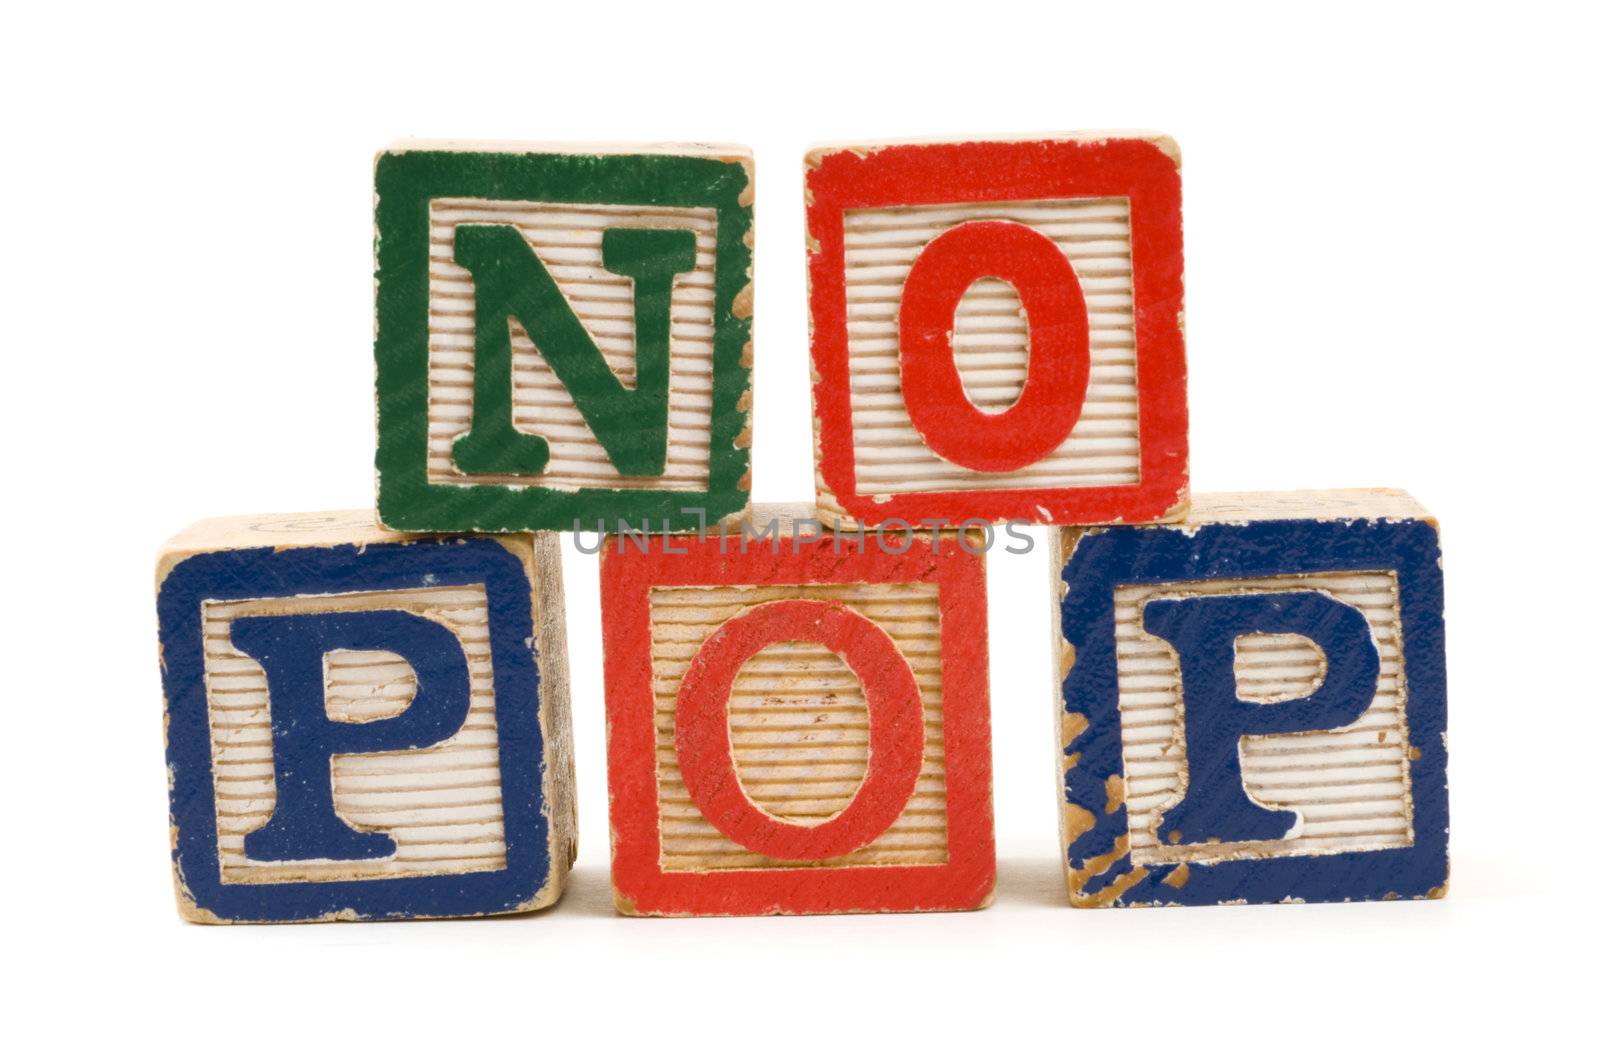 No Pop by Gordo25